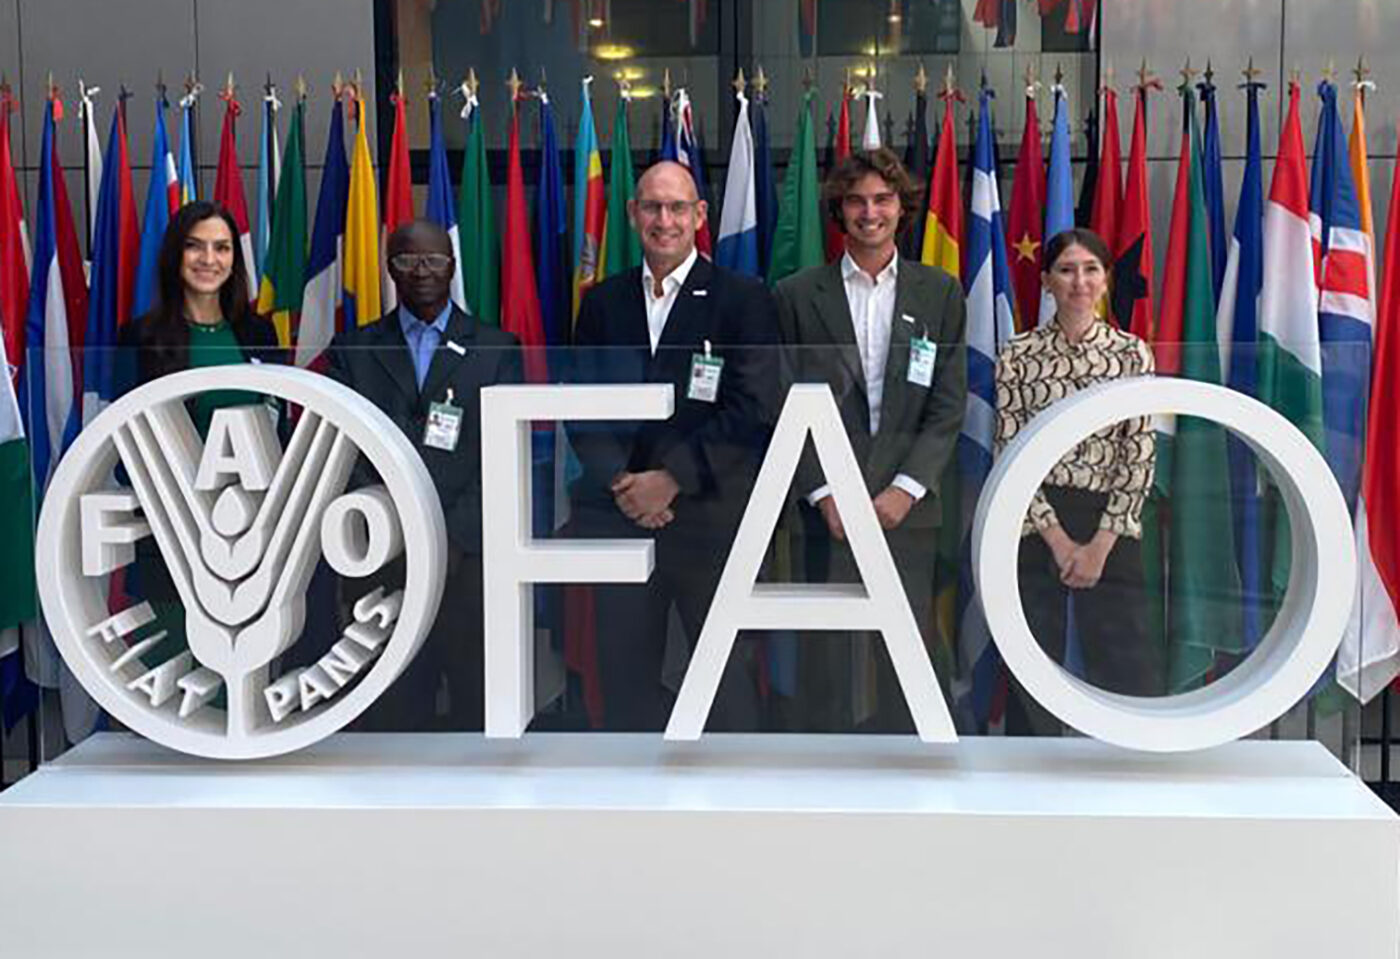 Global Fishing Watch staff behind FAO sign